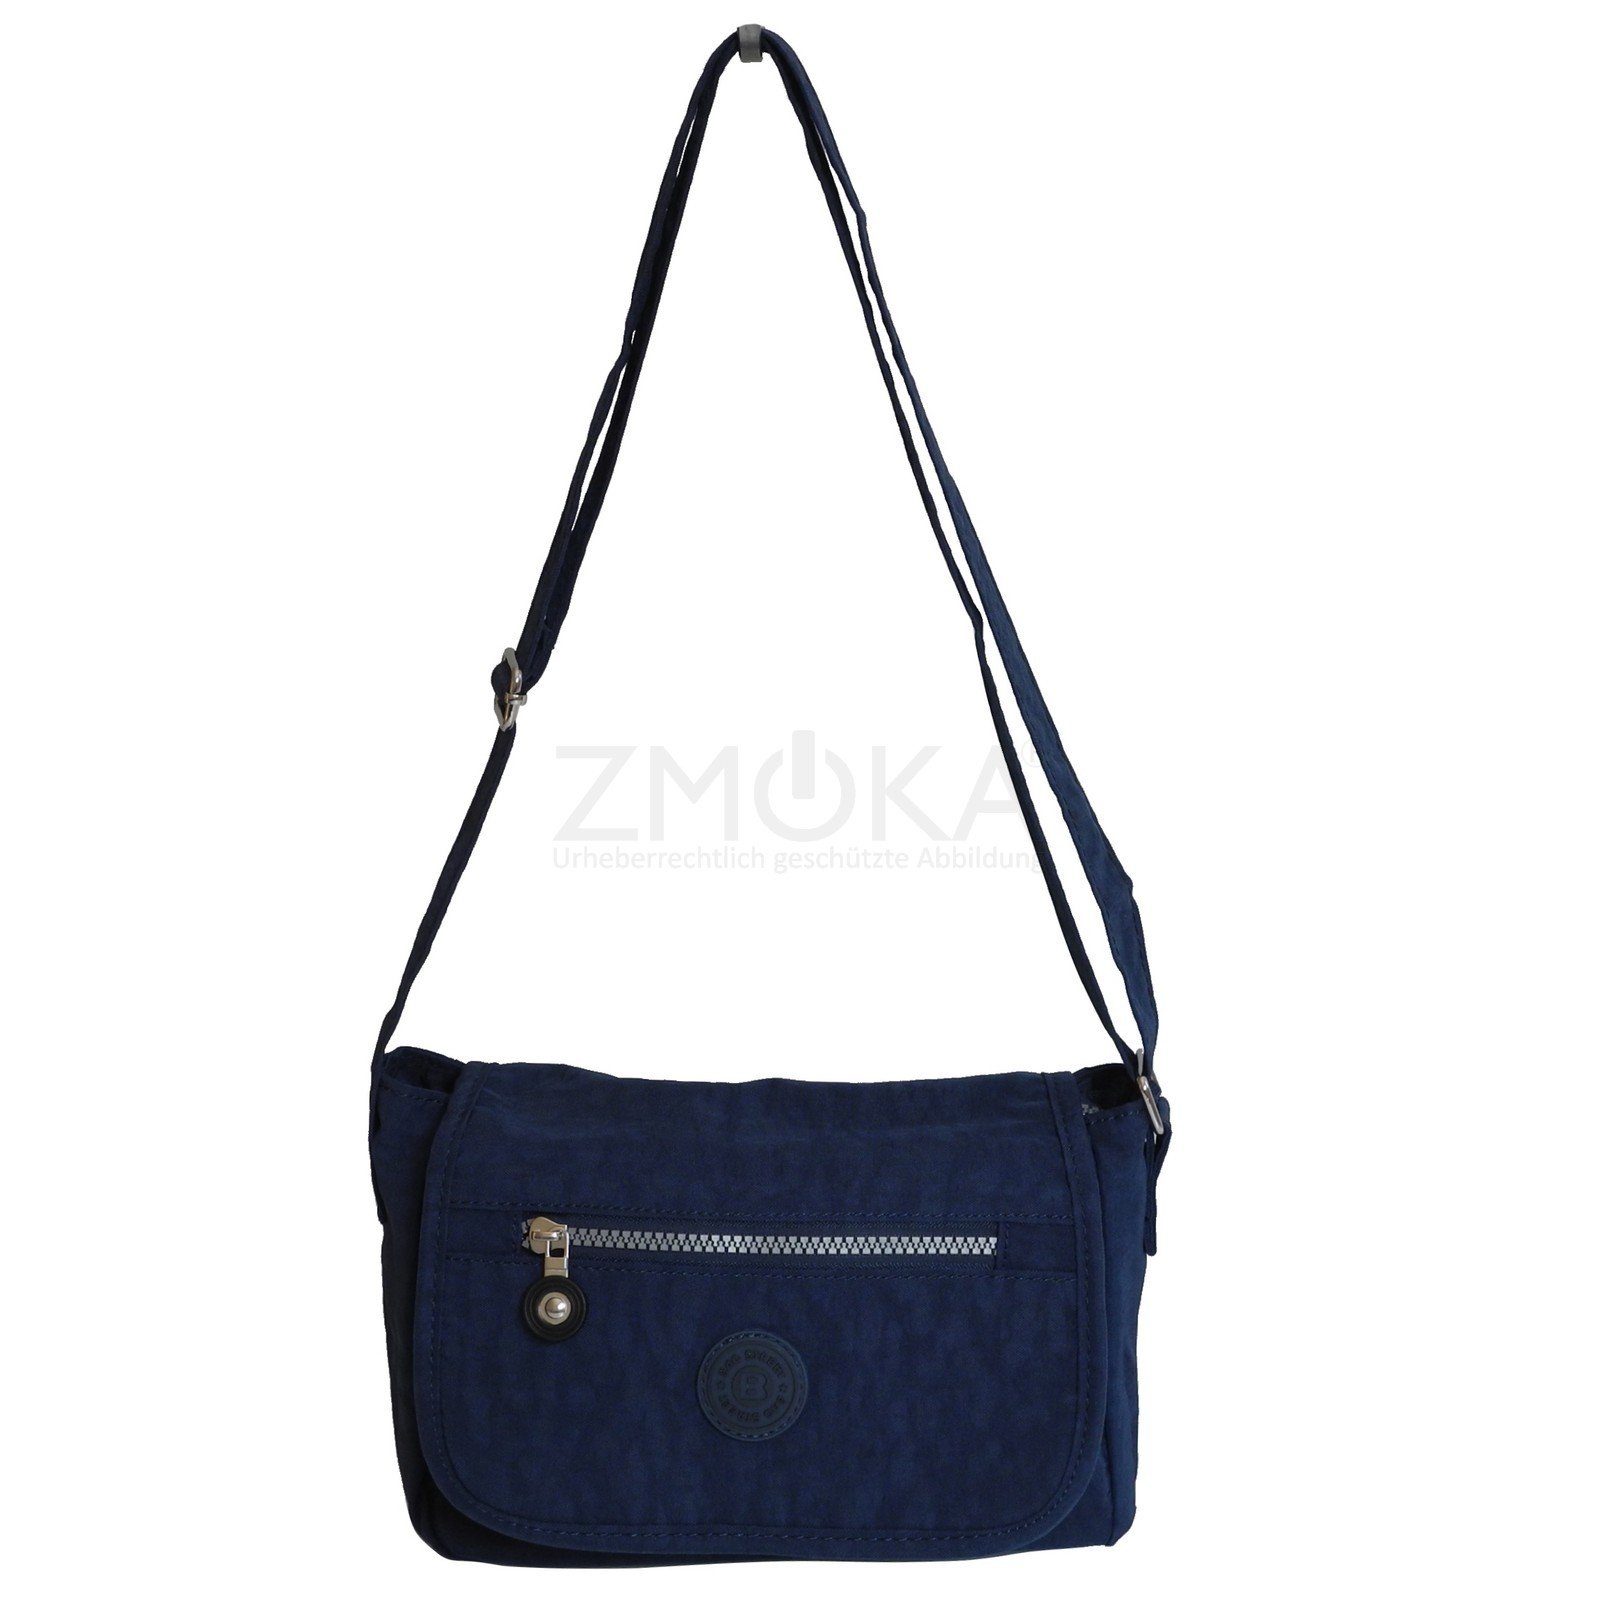 Damen Bag Crinkle Street Auswah Stofftasche STREET - Handtasche BAG Umhängetasche Navy Umhängetasche